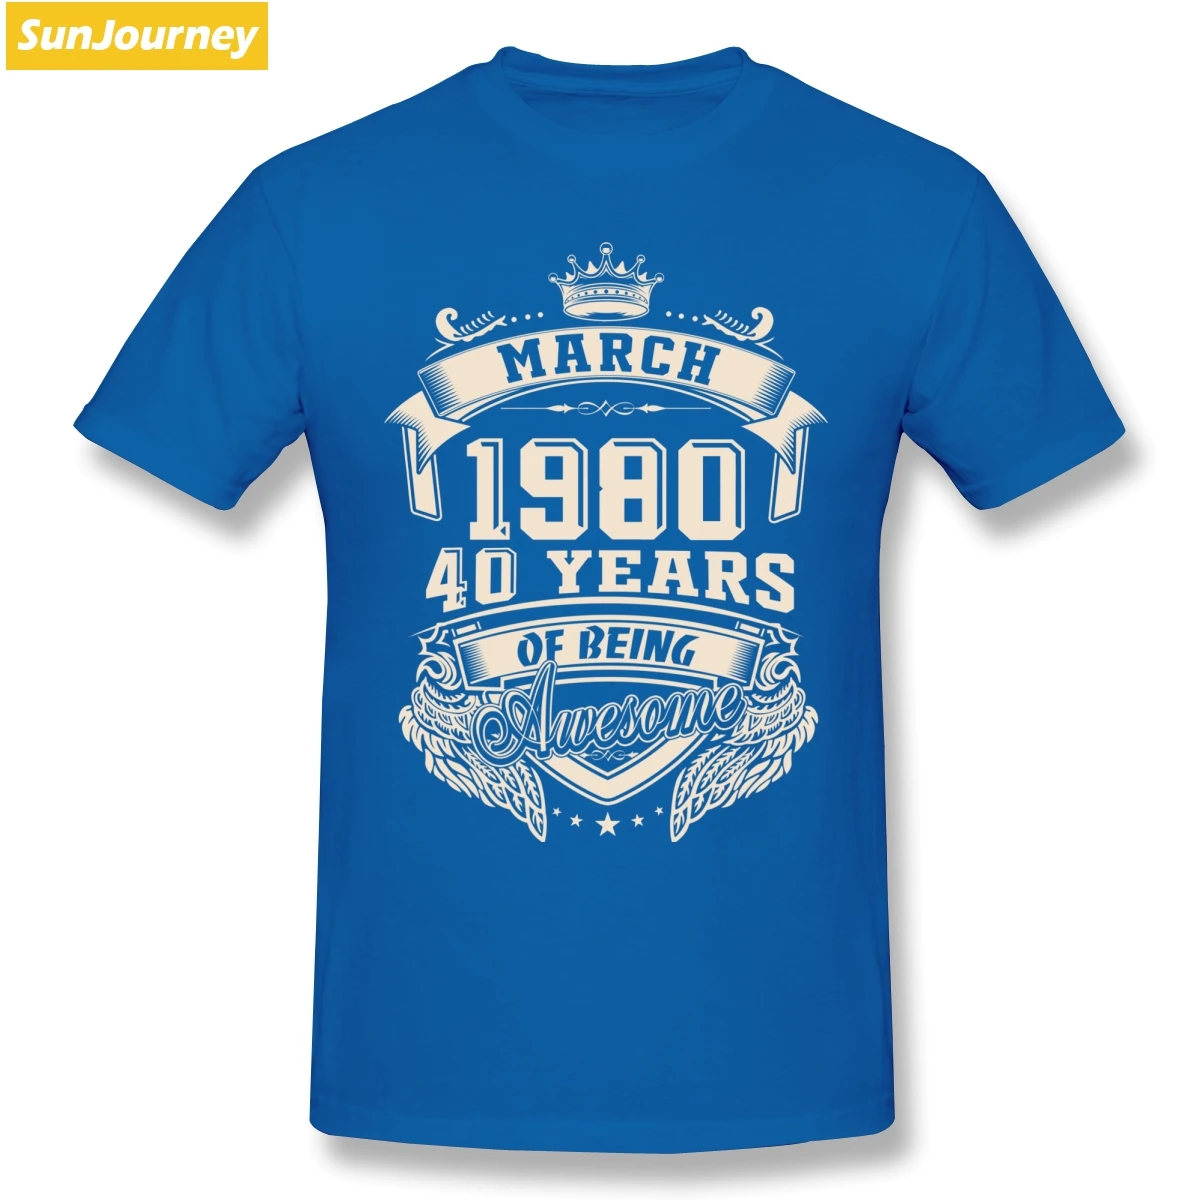 Born In March 1980 40 Years Of Being Awesome футболки большого размера из хлопка с круглым вырезом и коротким рукавом мужские рубашки - Цвет: Королевский синий